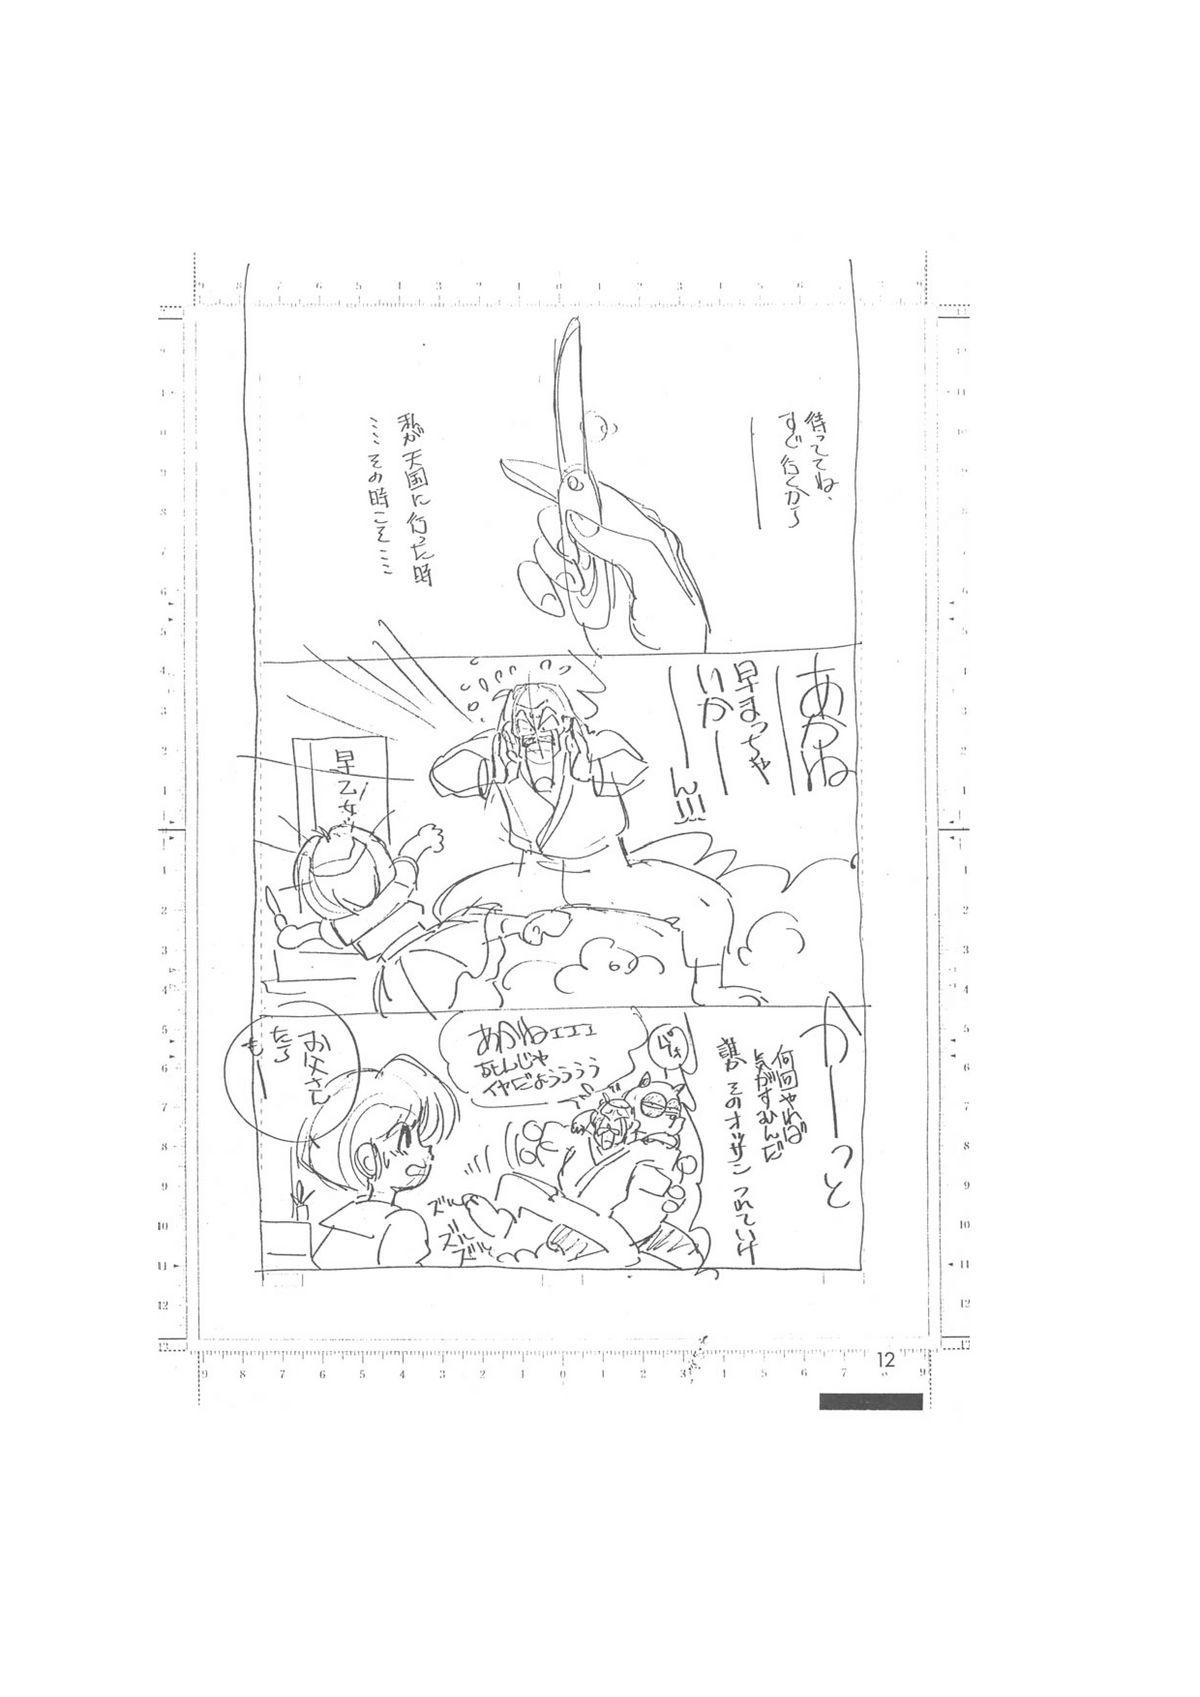 Vibrator メイキング・オブ・『真・最悪的悲劇』 - A Ranma Doujin Sketch by Dark Zone - Ranma 12 Domination - Page 12